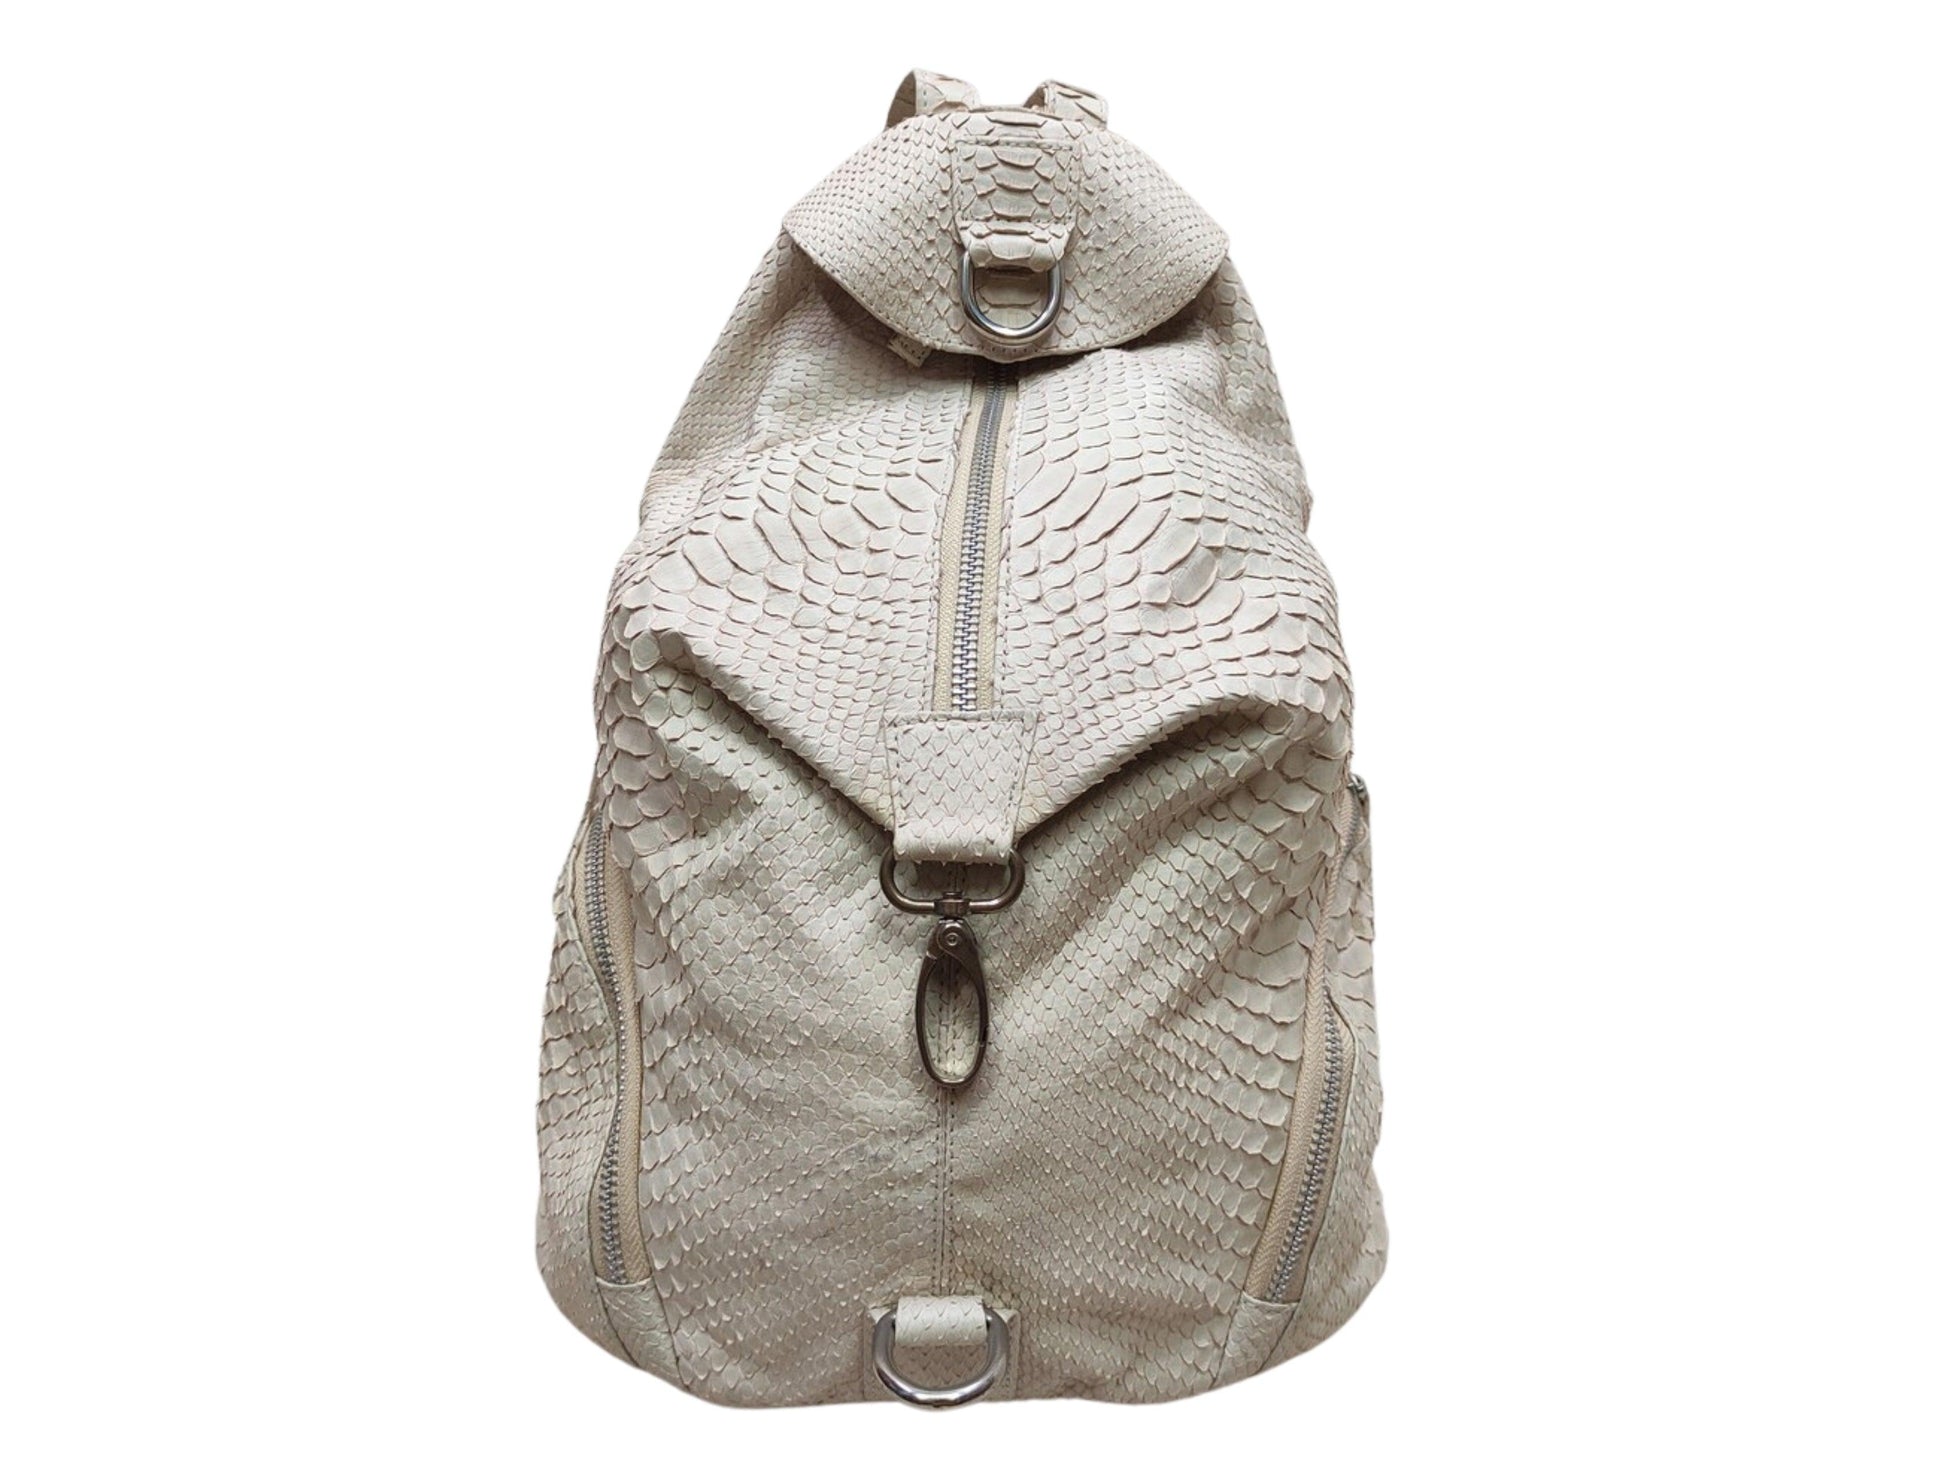 Backpacks Handmade Snakeskin Backpack, Python Travel Bag, School Backpack, Unique Gift Cream Python Jacket by LFM Fashion